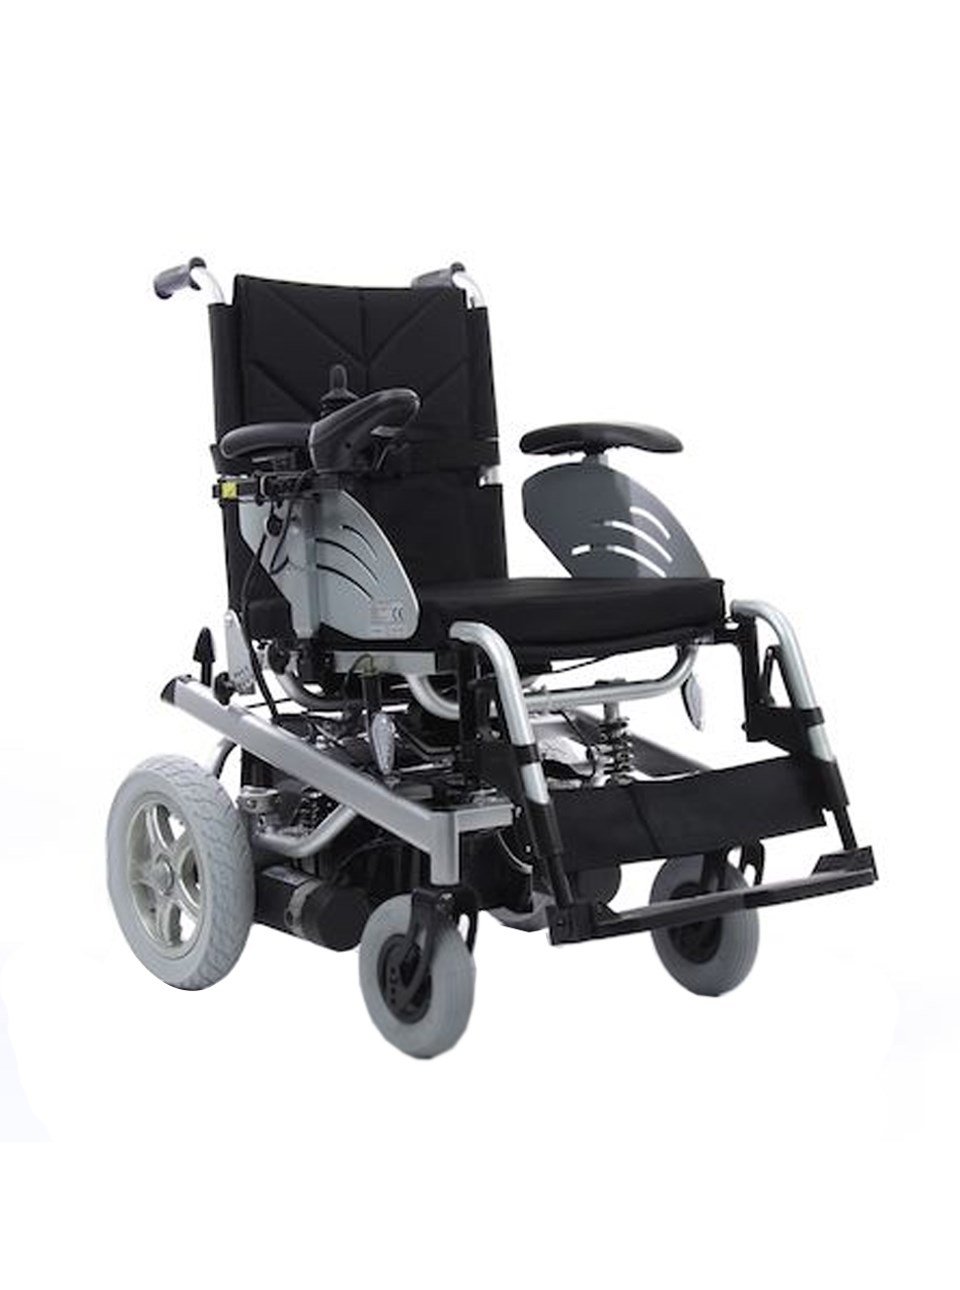 Wollex W123 Akülü Tekerlekli Sandalye